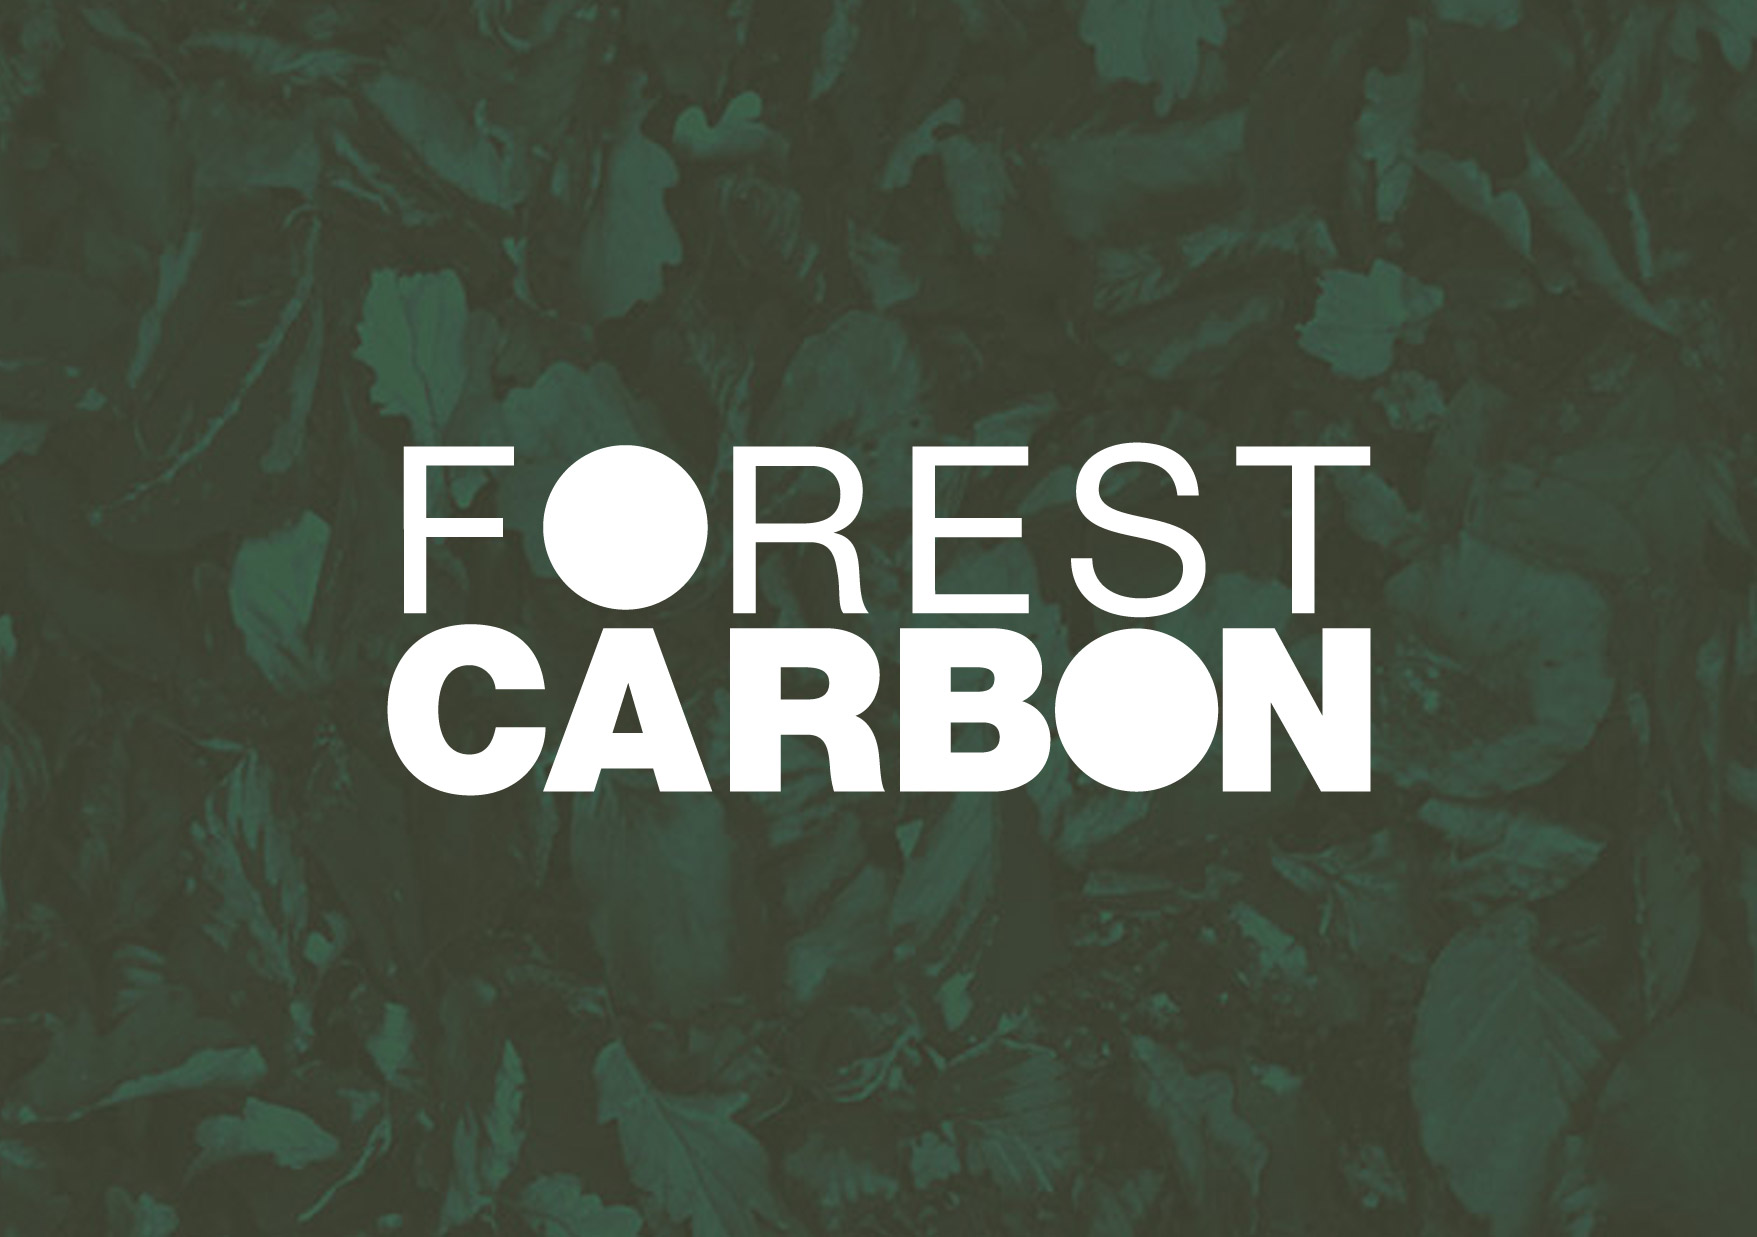 forest carbon